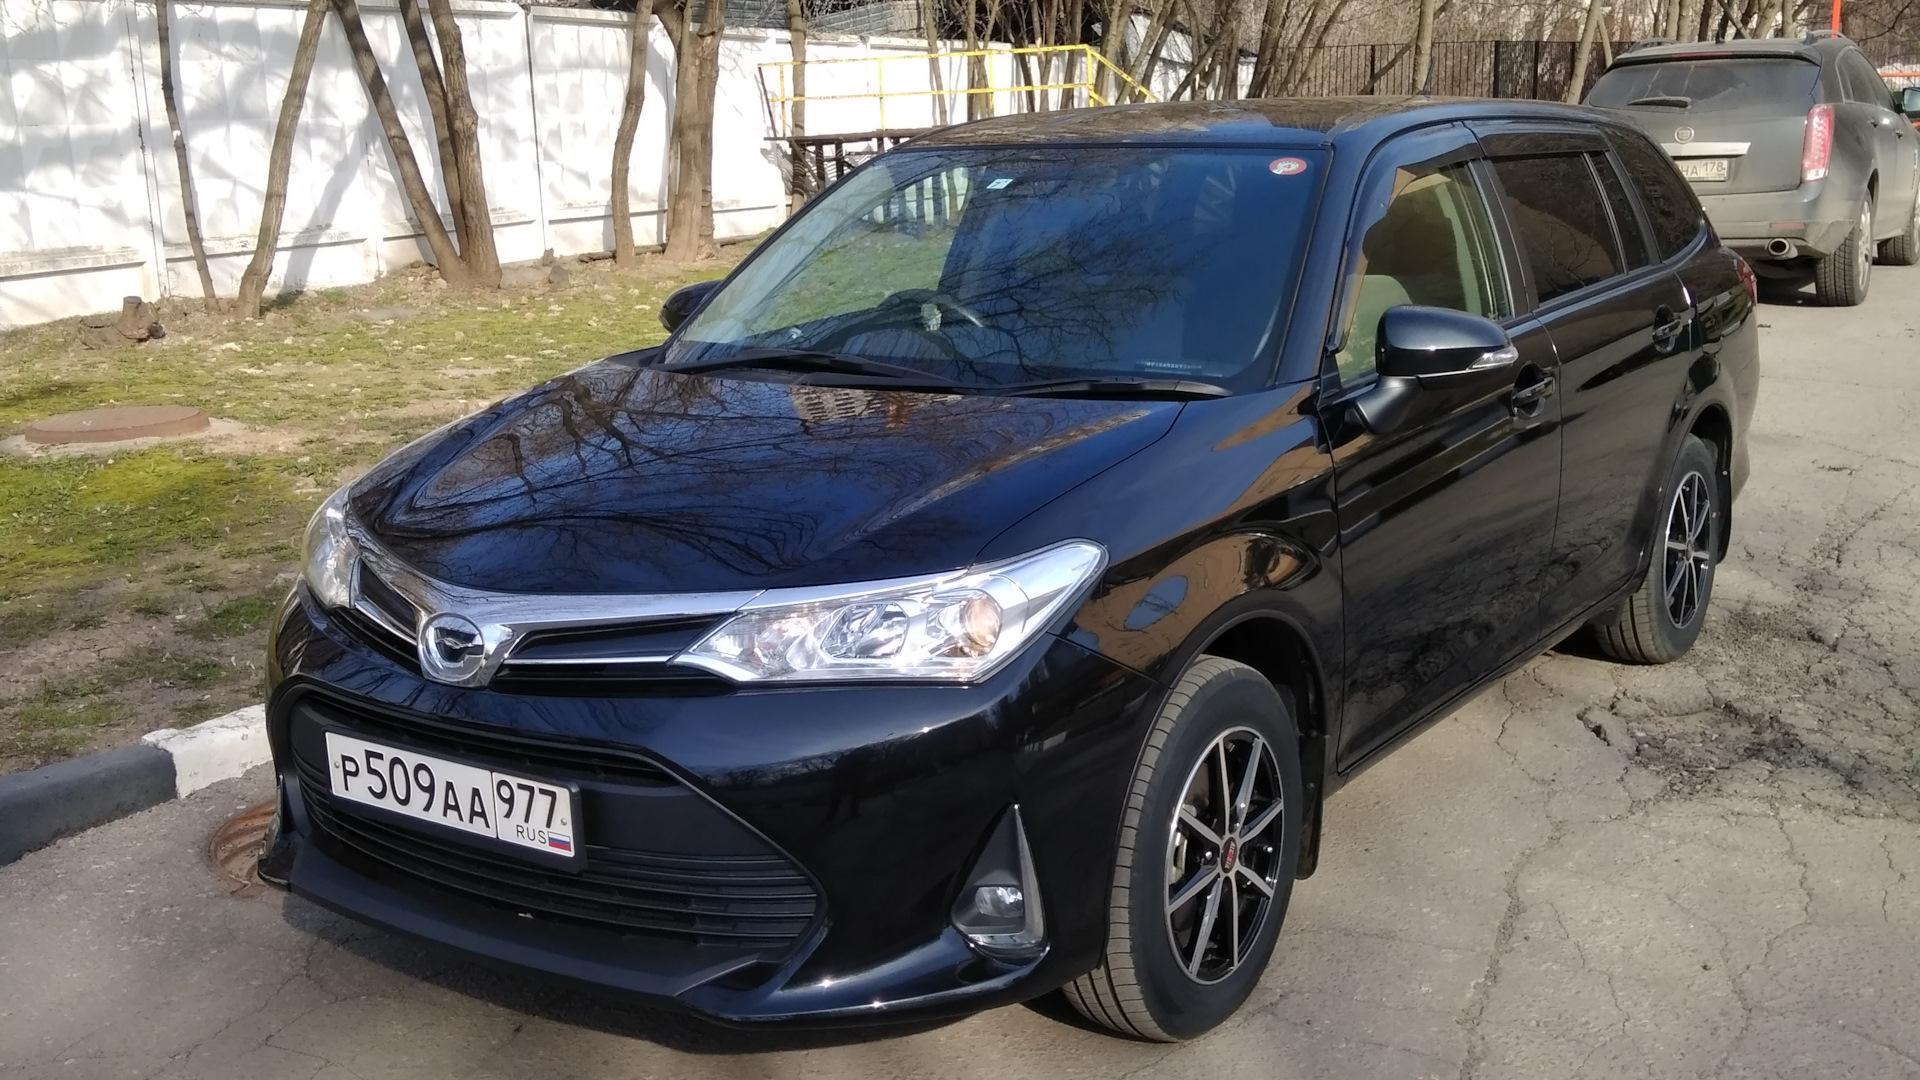 Toyota E160 1.5 бензиновый 2019 | Toyota Corolla Filder на DRIVE2